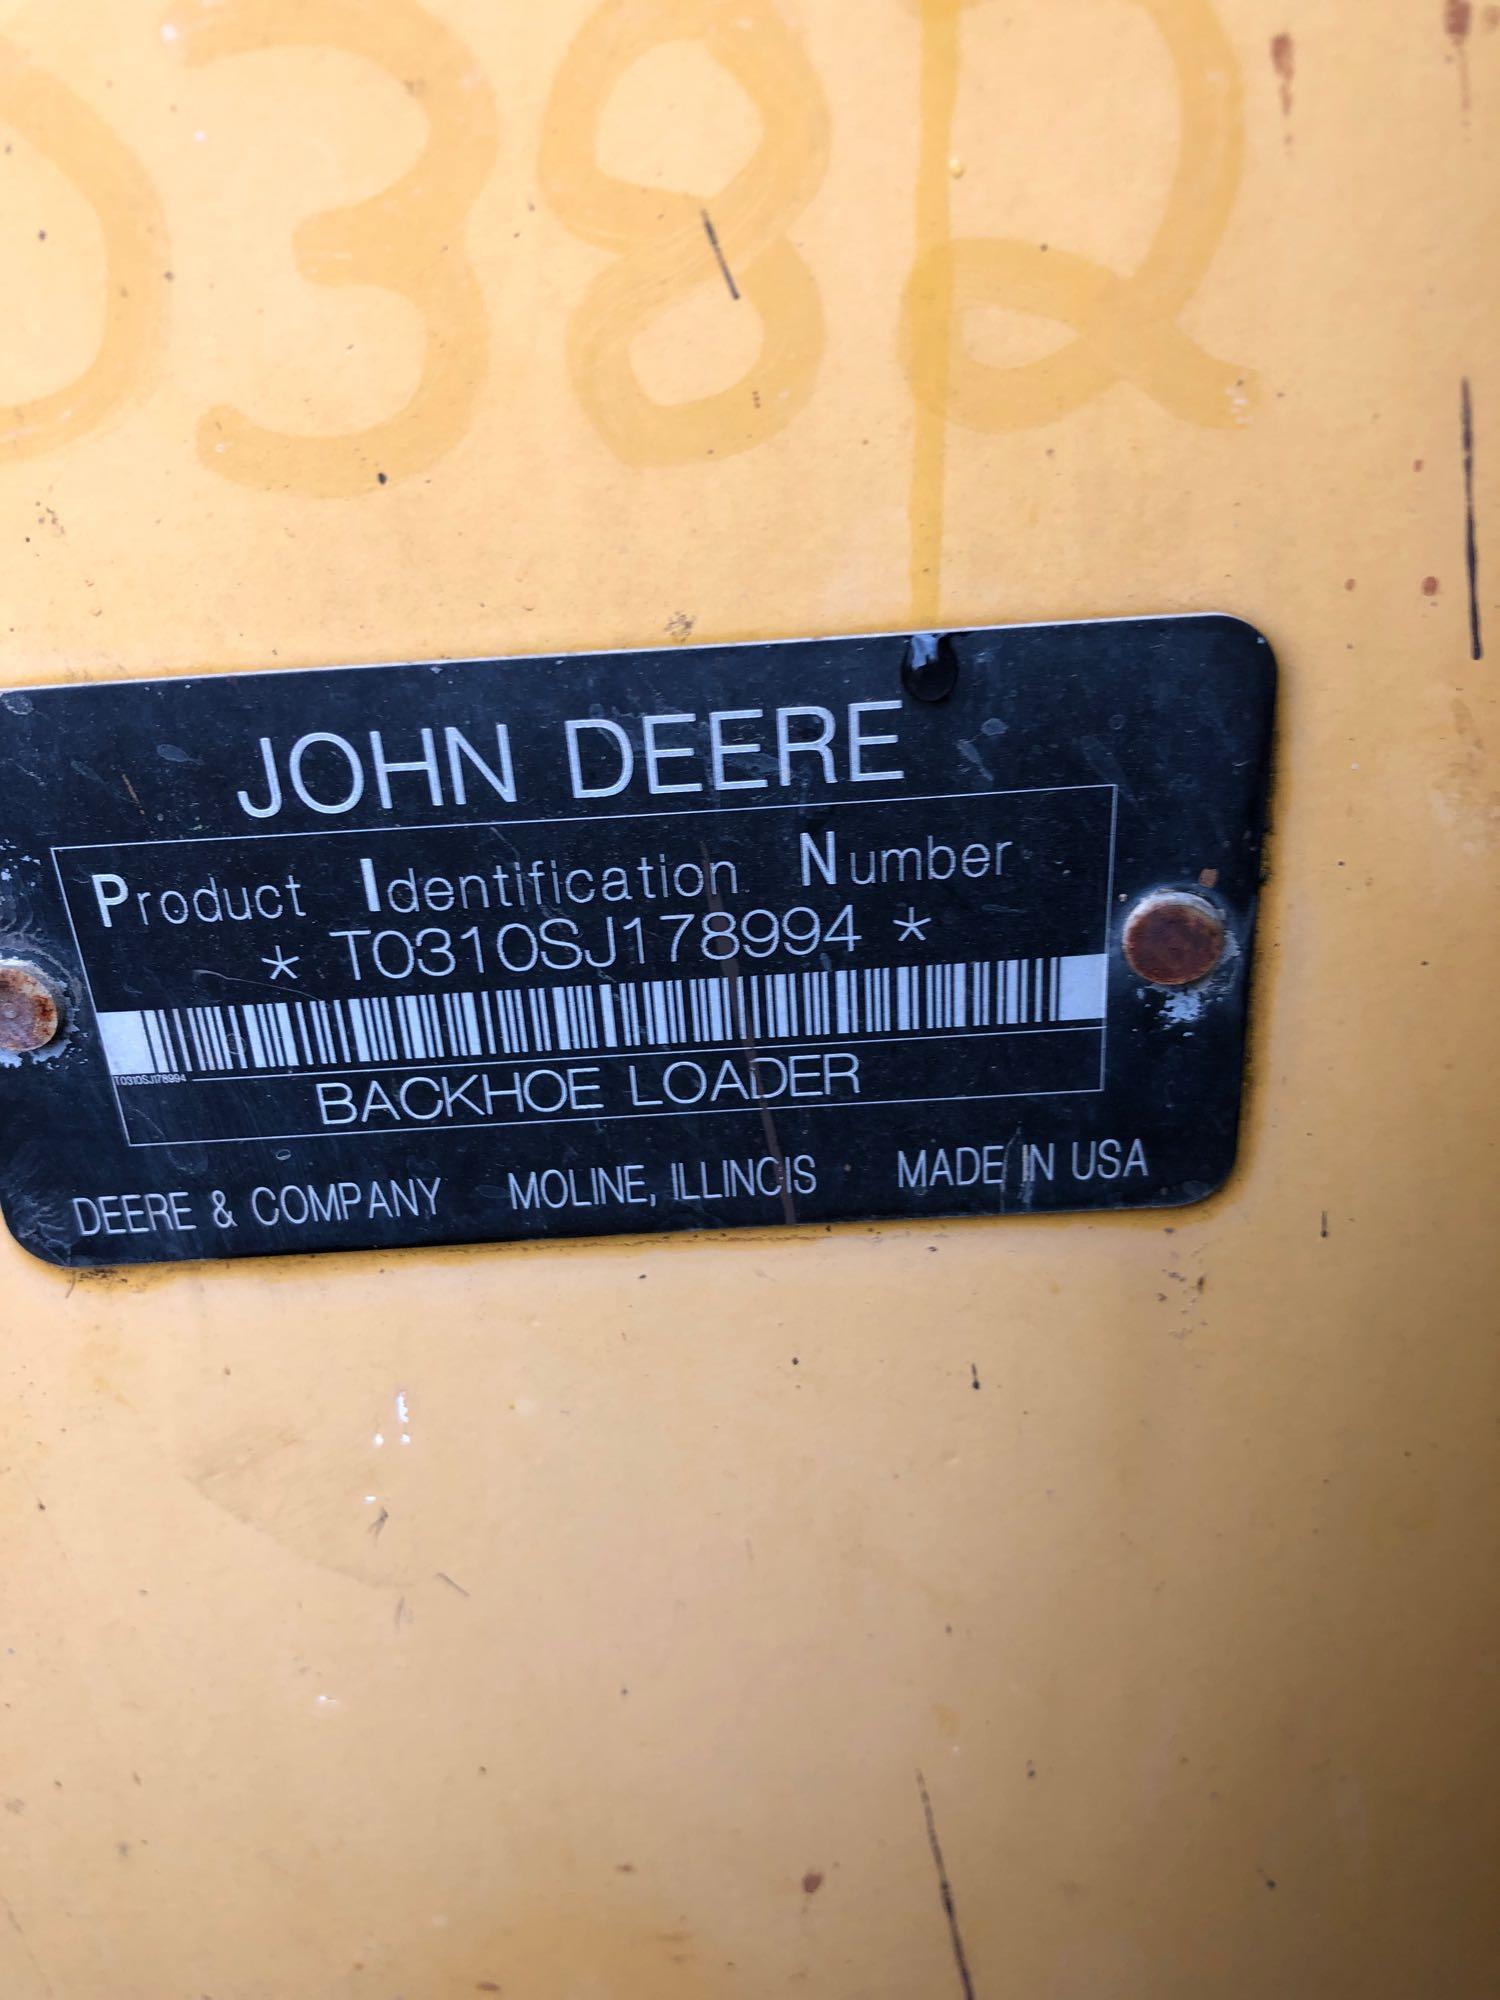 JOHN DEERE(310sj)backhoe/loader(4x4 diesel;extend-A-hoe;plumbed for hammer;sawtooth boom;cab heat/AC